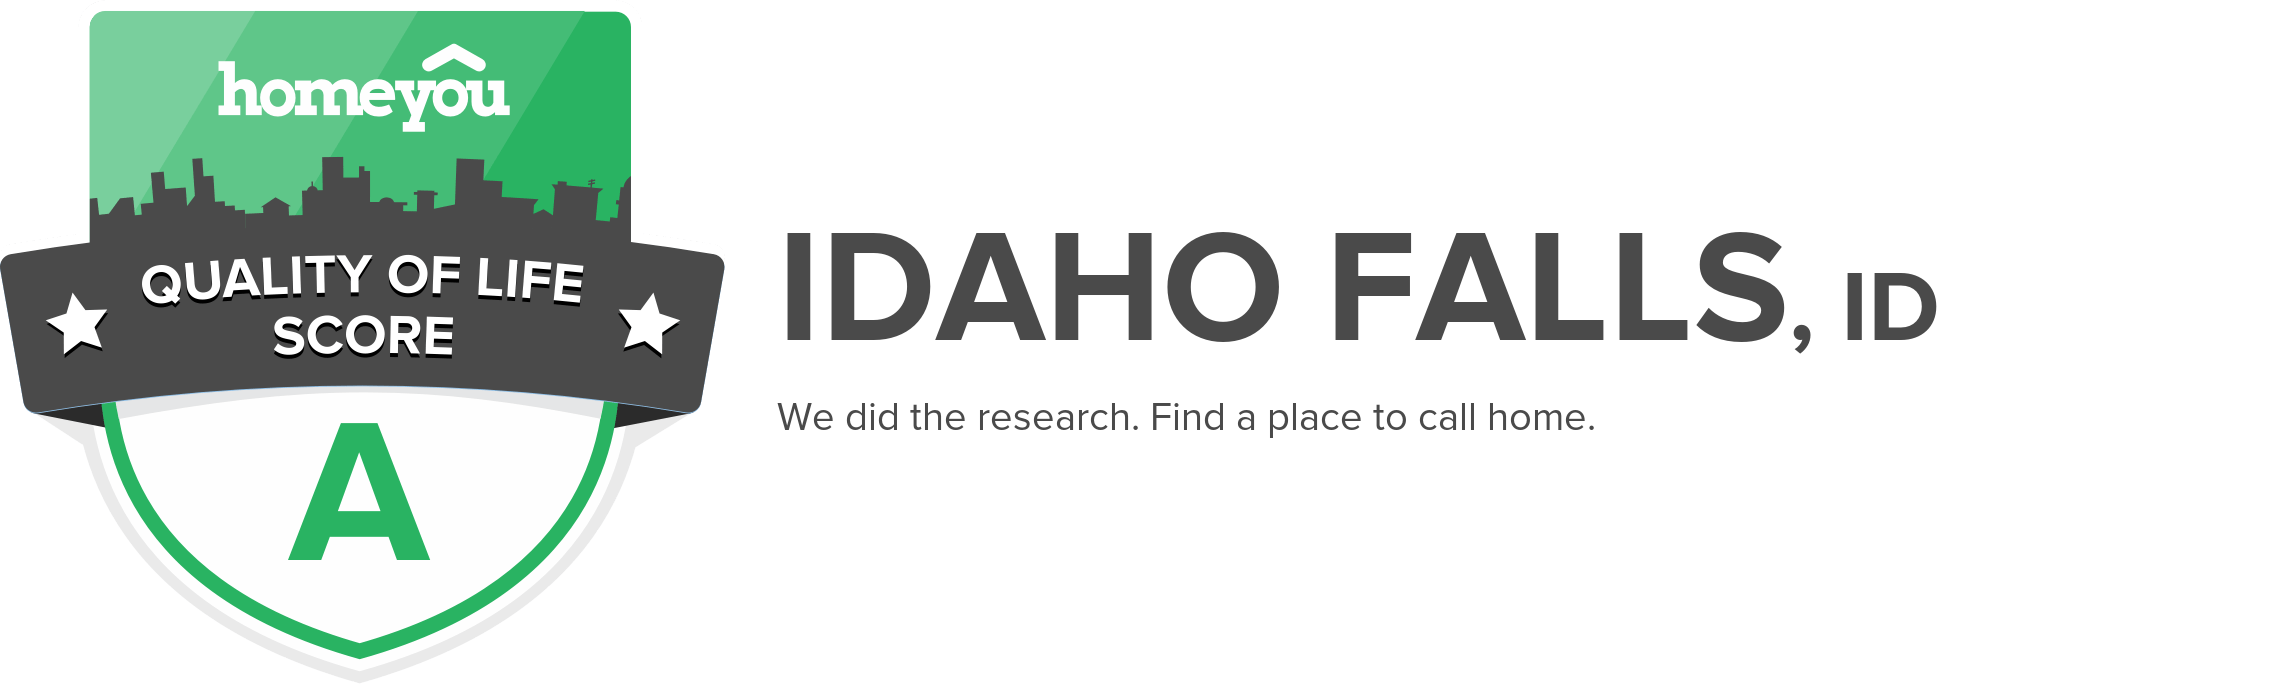 Idaho Falls, ID